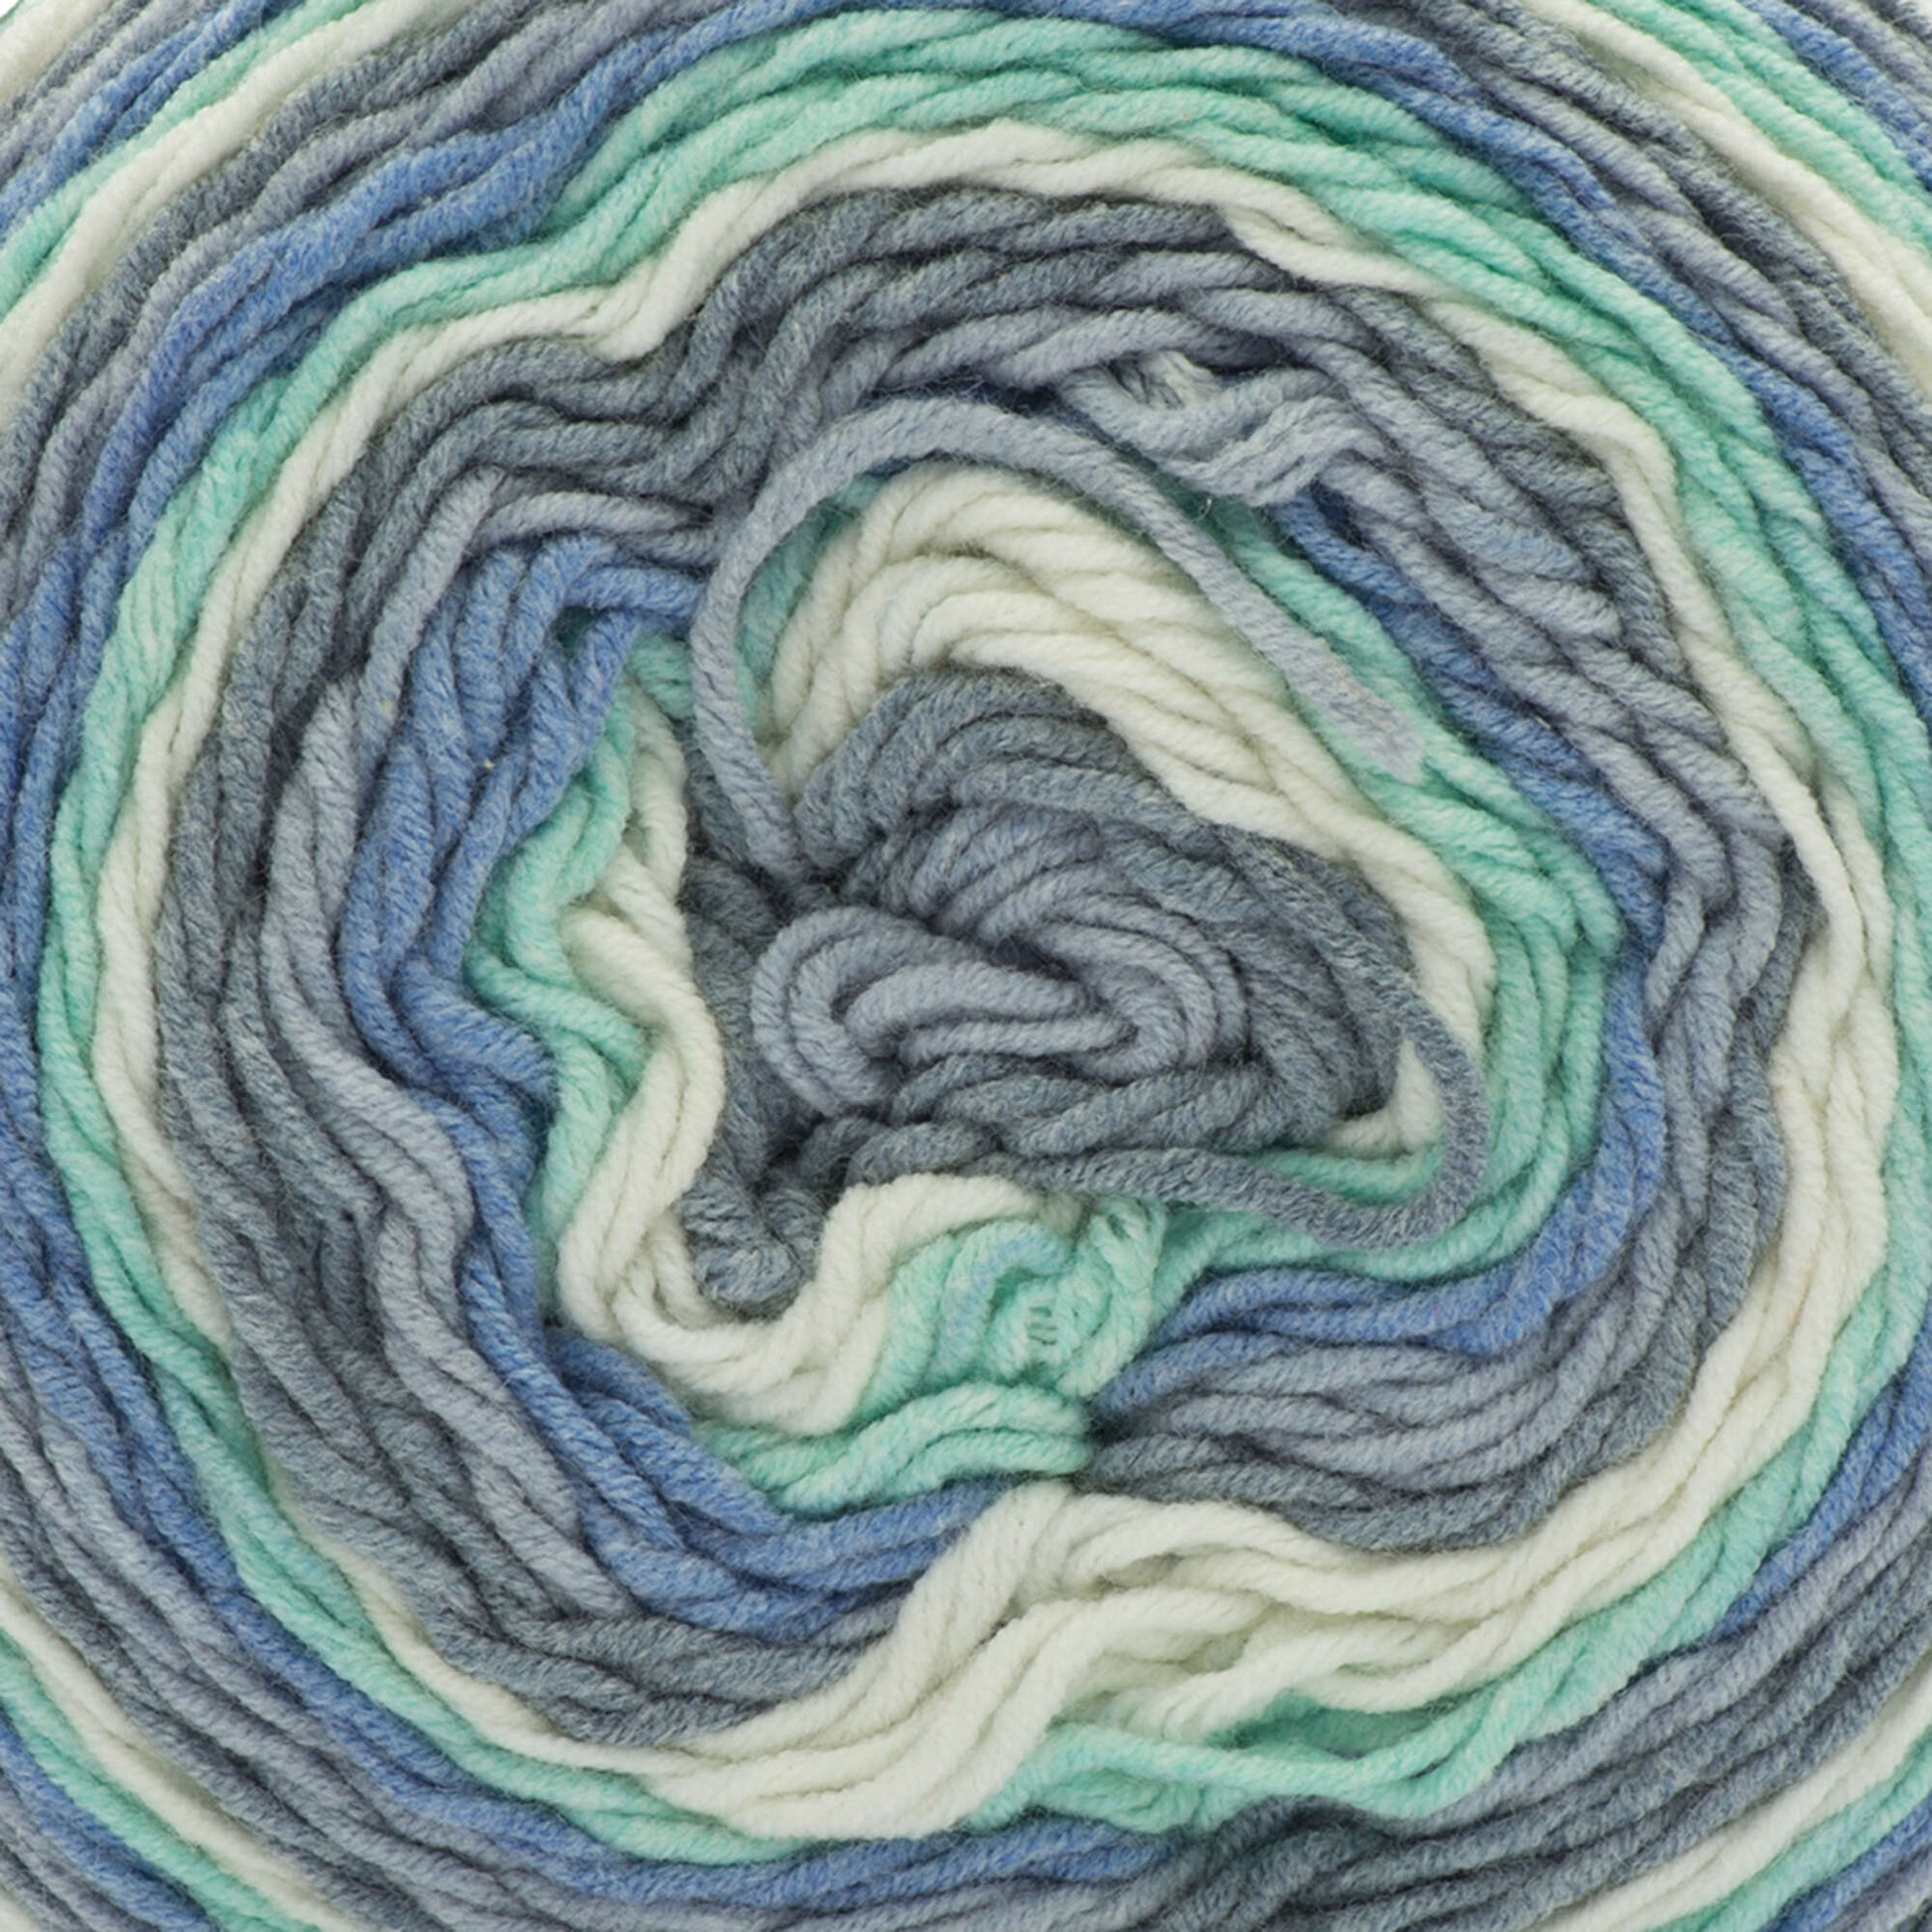 Multi Cotton Yarn Cakes in BLUE WINE, Sport DK Yarn for Crocheting or  Hand-knitting, Yarn Box. 